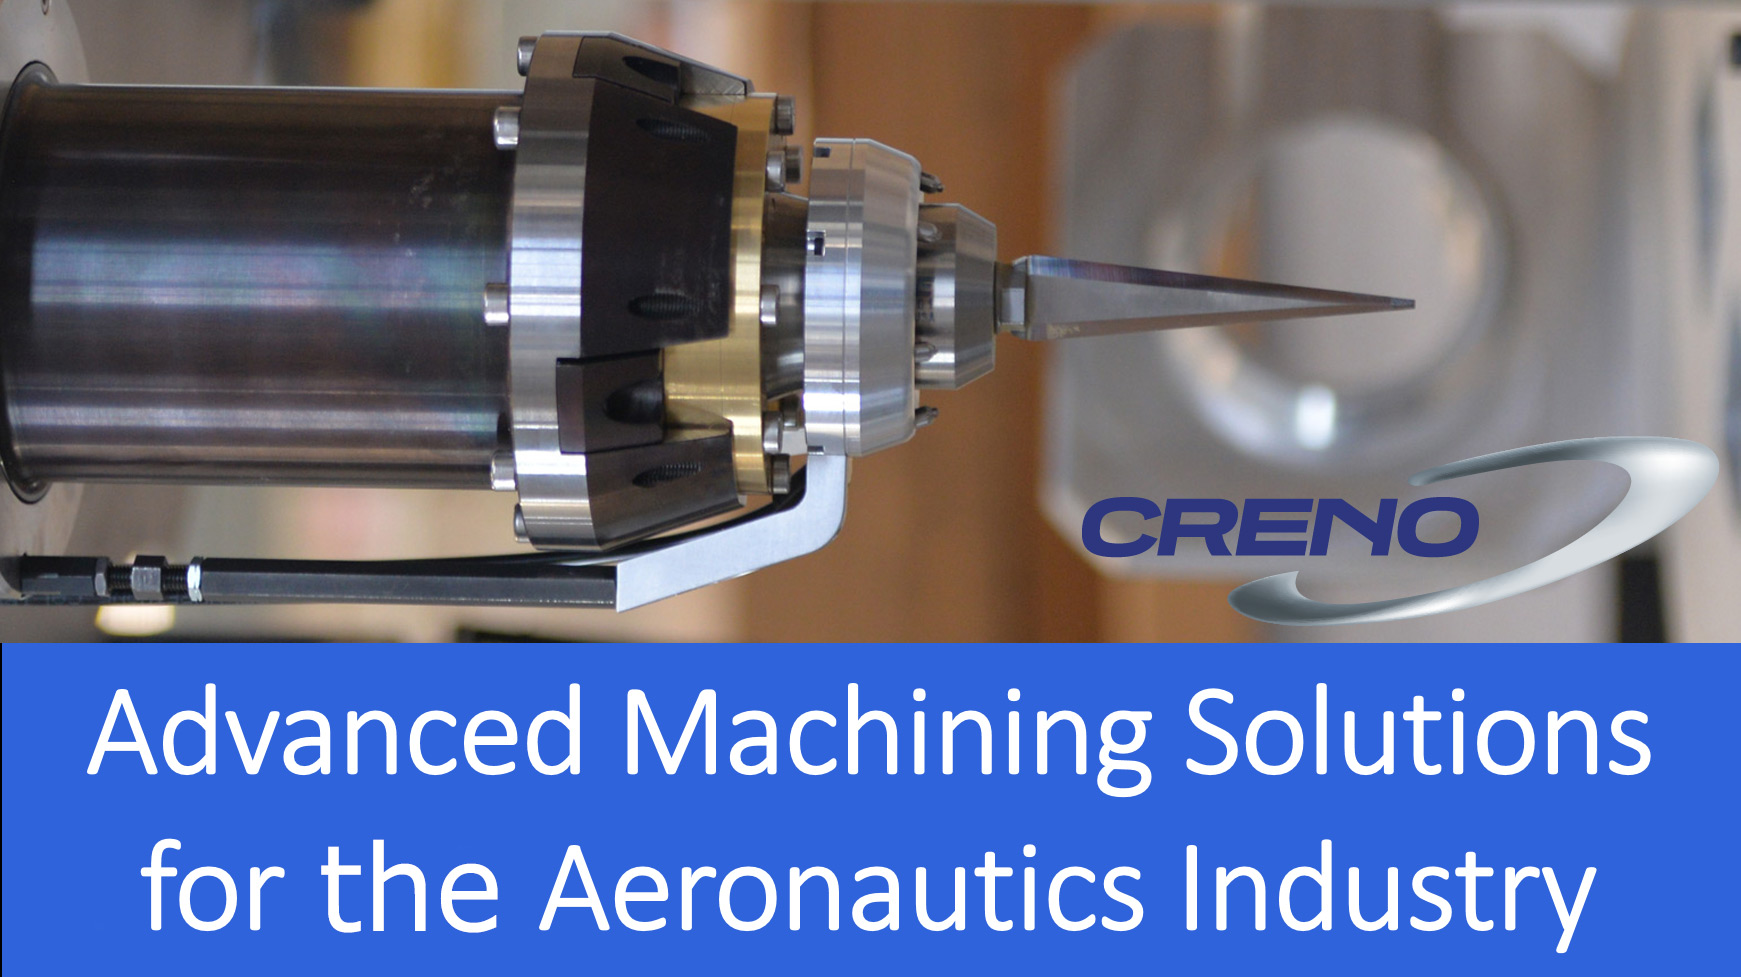 CRENO Advanced Machining Solutions for Aeronautics Industry